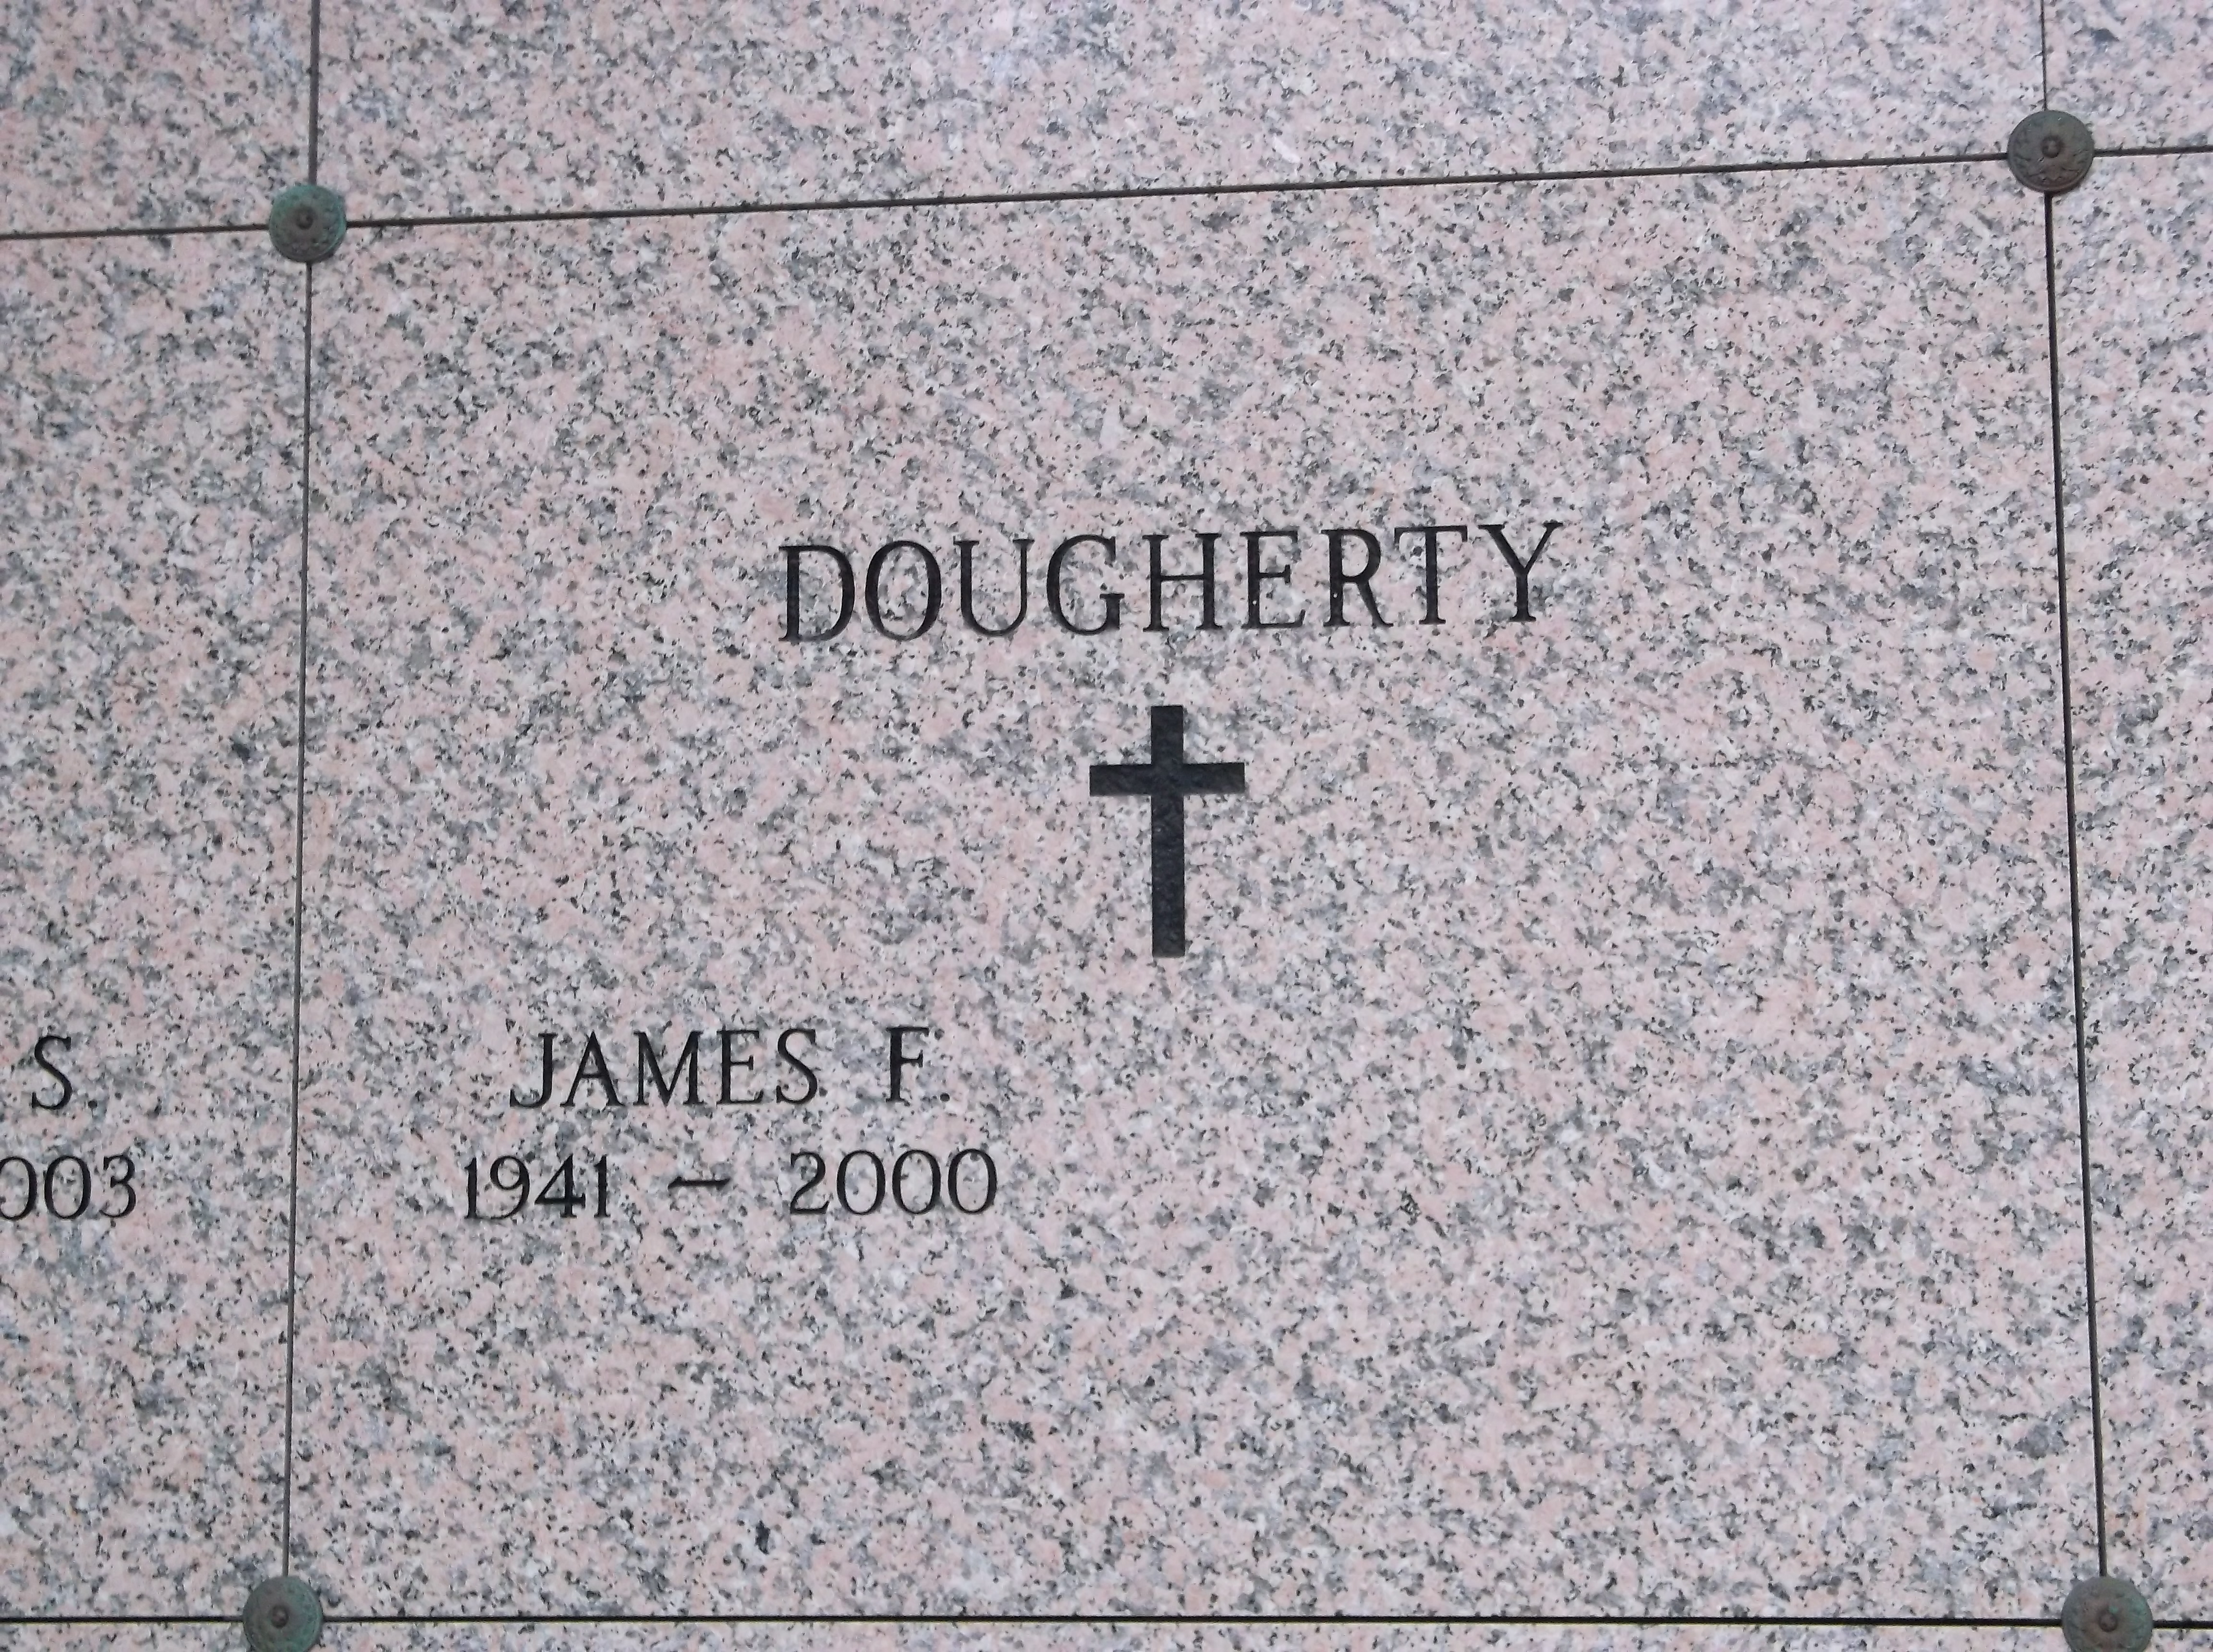 James F Dougherty